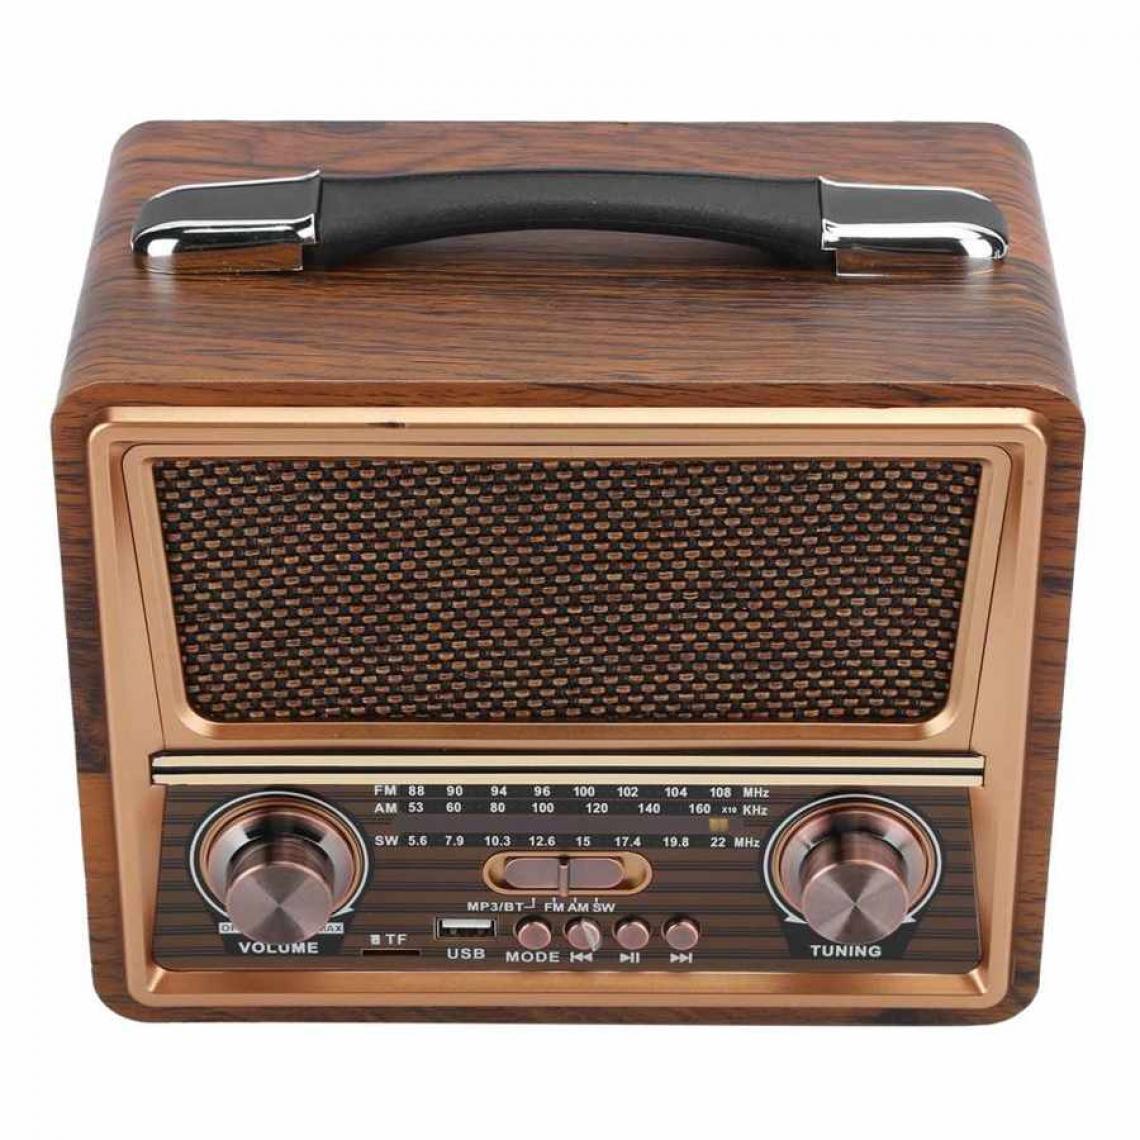 Universal - Radio 3 bandes Radio réglable FM/AM/SW Haut-parleur Bluetooth portable en bois Radio rechargeable 110/220V |(brun) - Radio